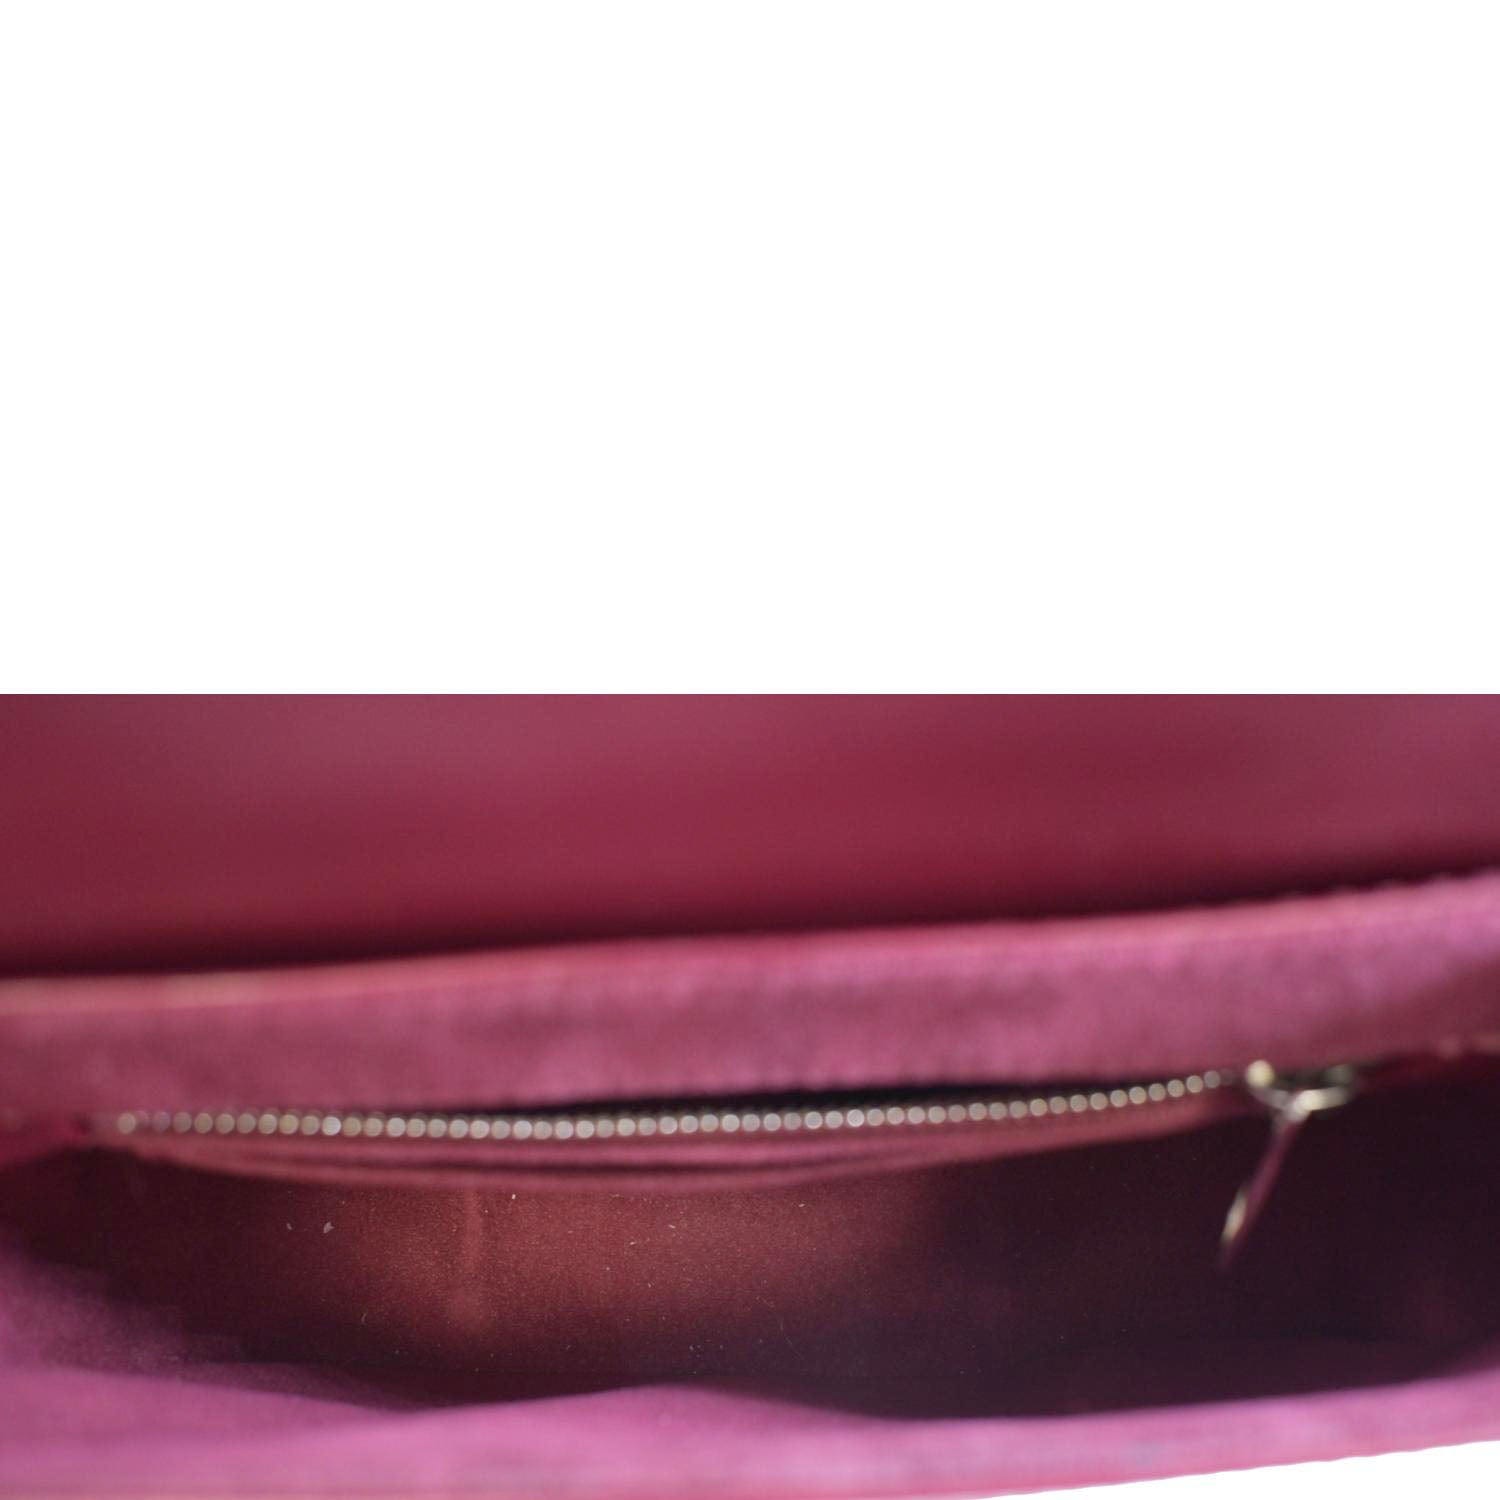 Edens House - Maxi Louis Vuitton 2in1 bag Price: #8000